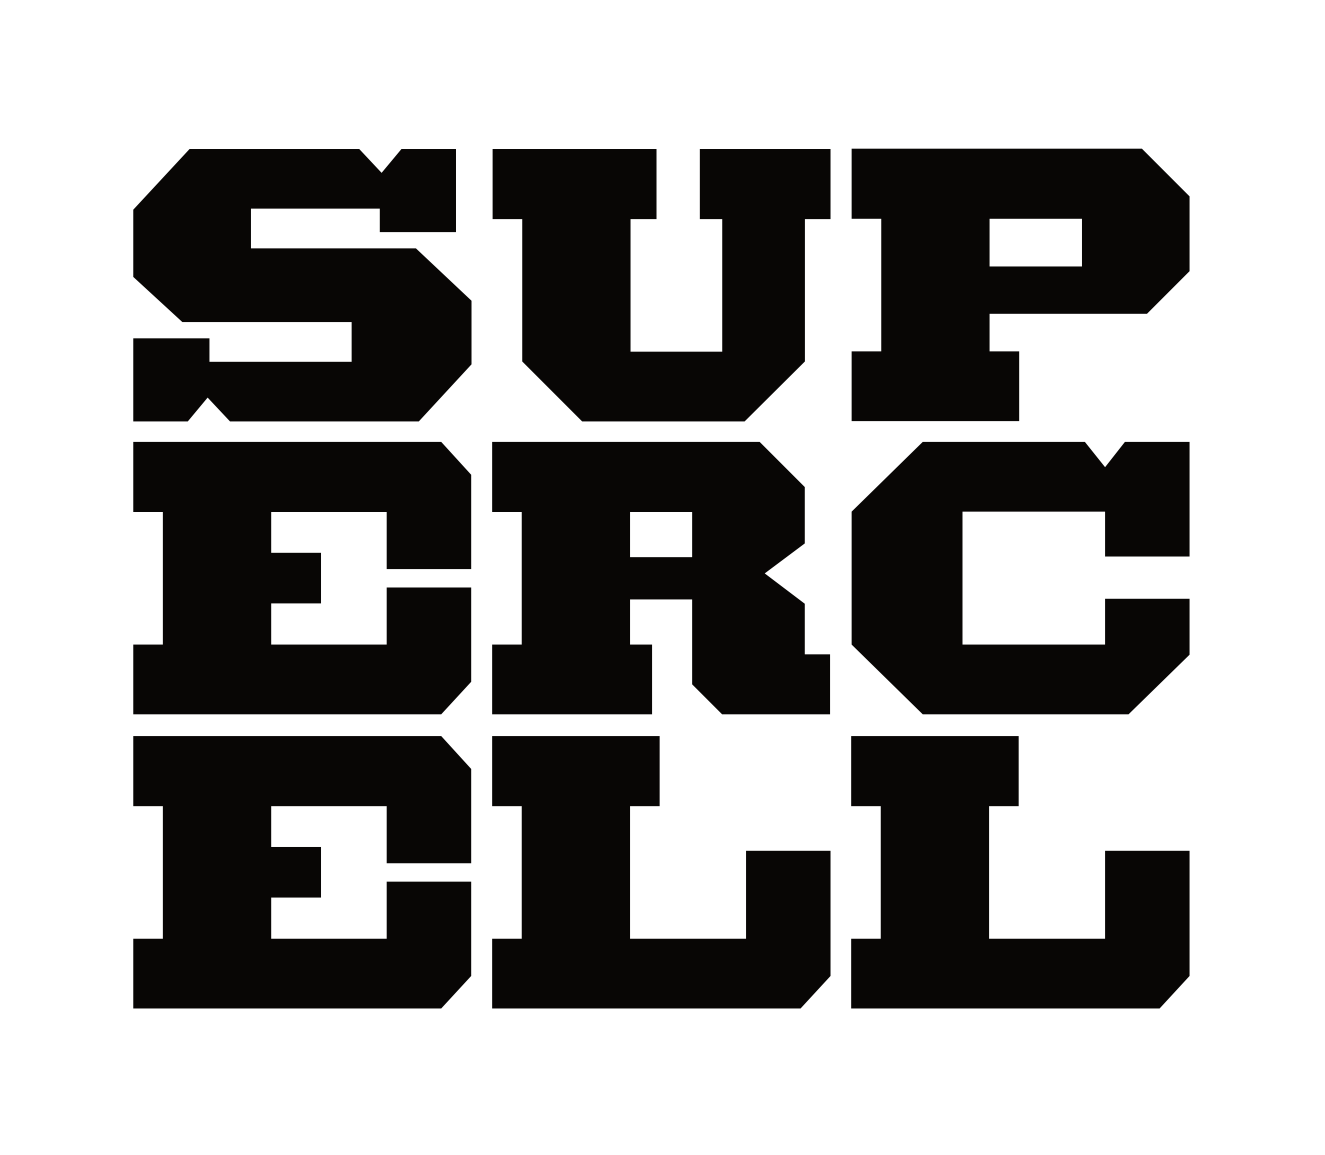 supercell-logo-blackbg.png